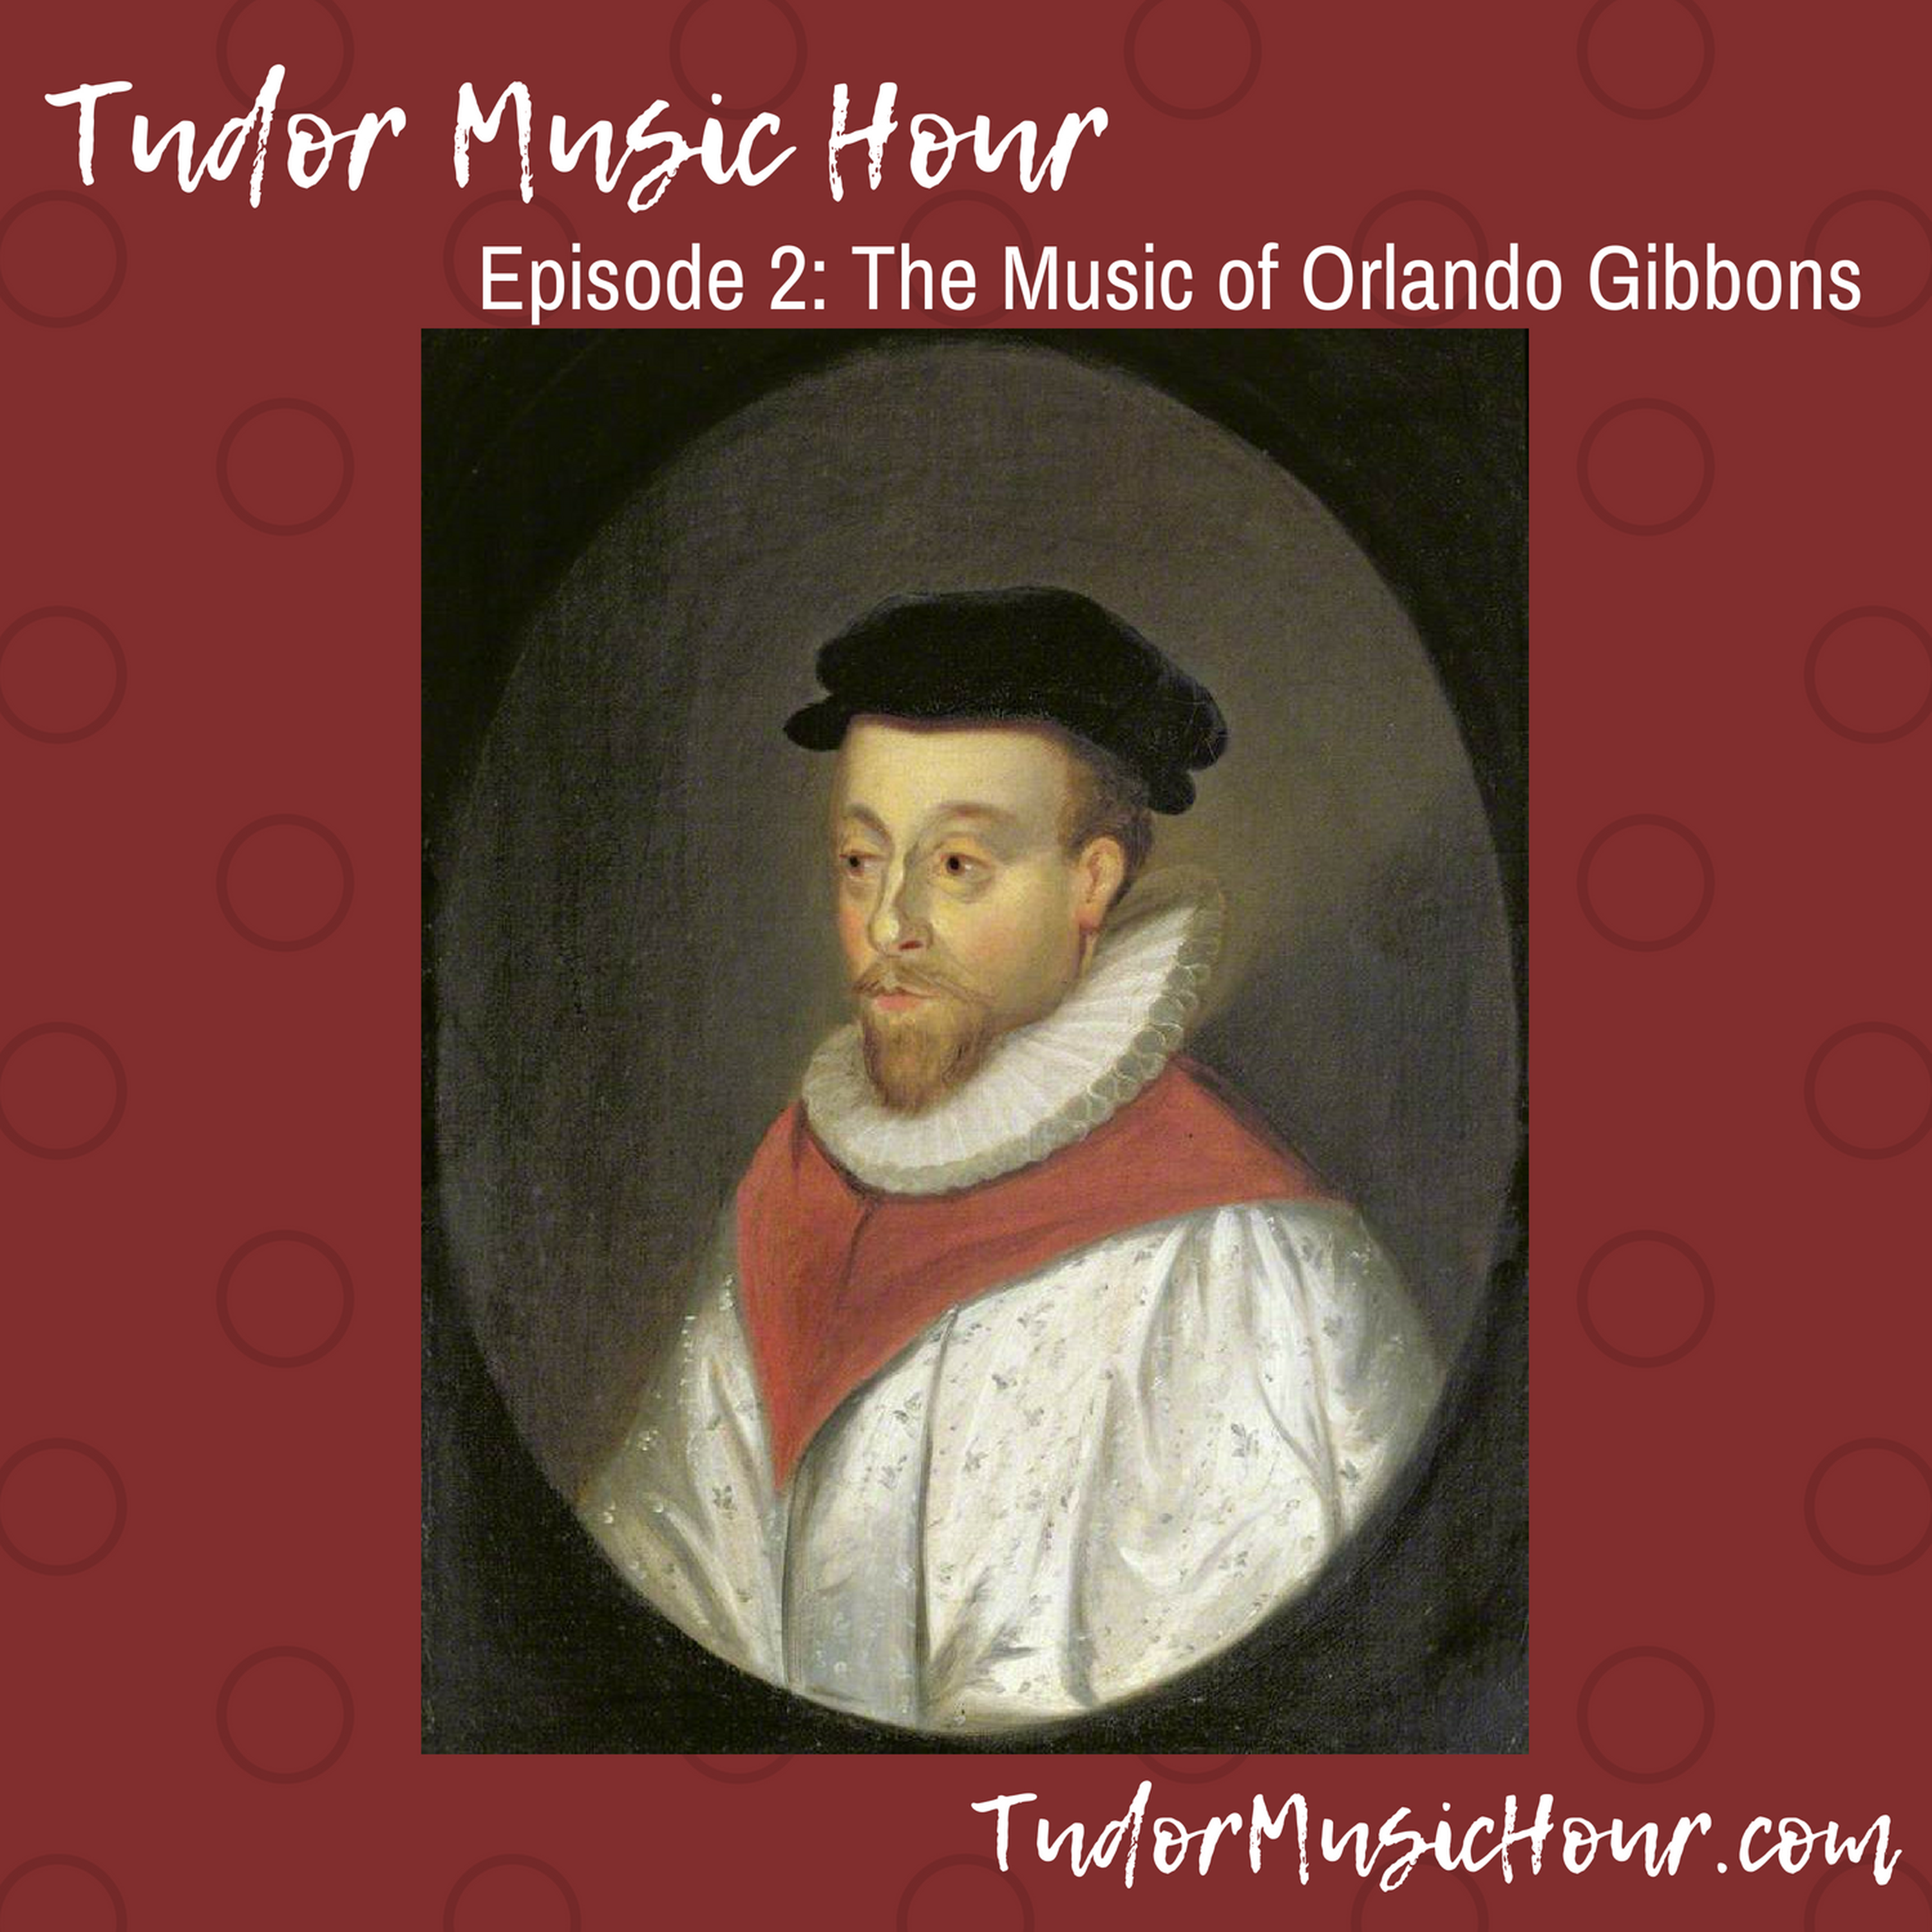 Supplemental: Tudor Music Hour Episode 2: The Music of Orlando Gibbons